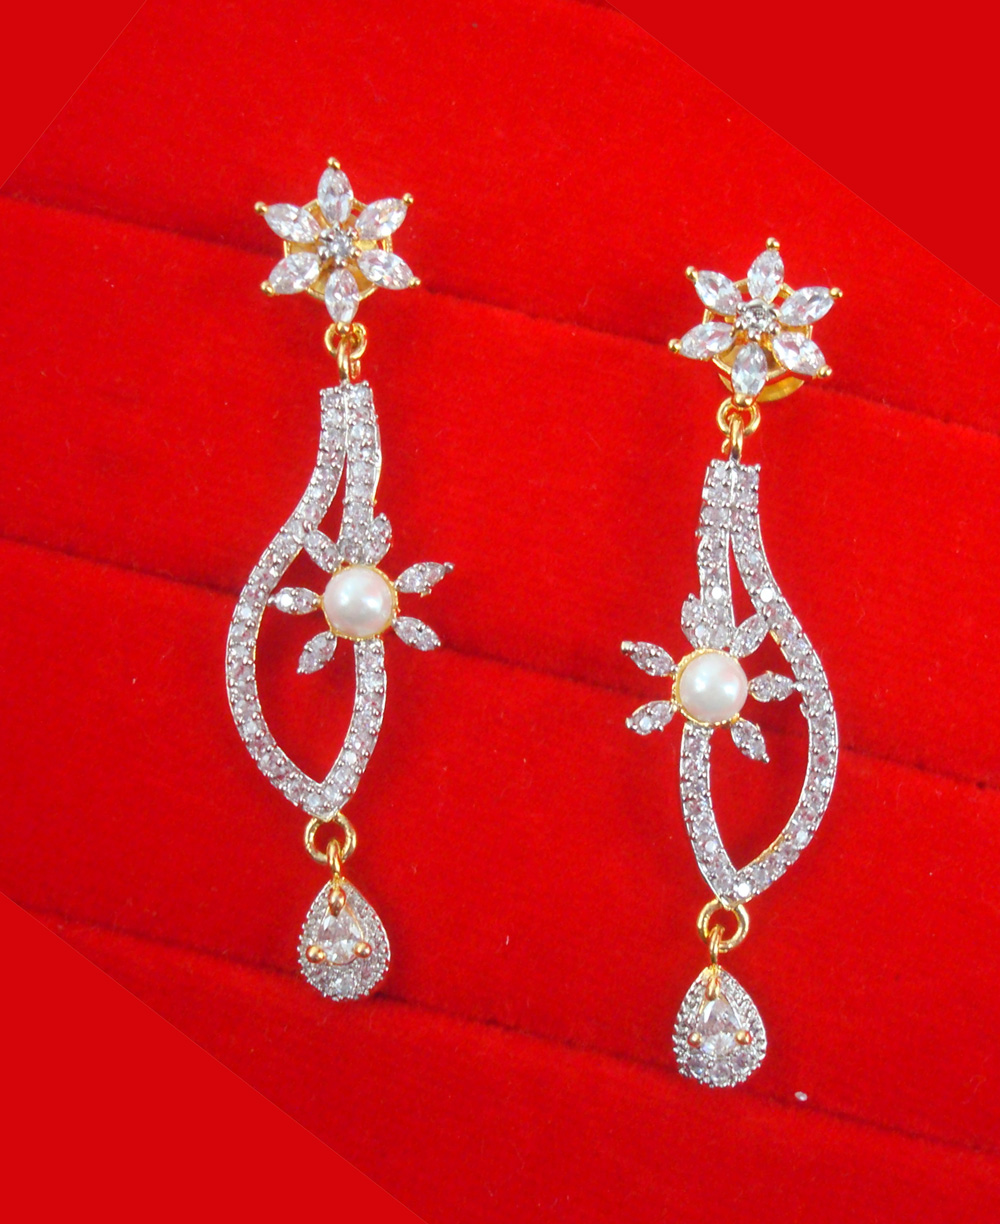 Buy Beautiful Design Gold Covering Long Dangle Earrings Designs for Women